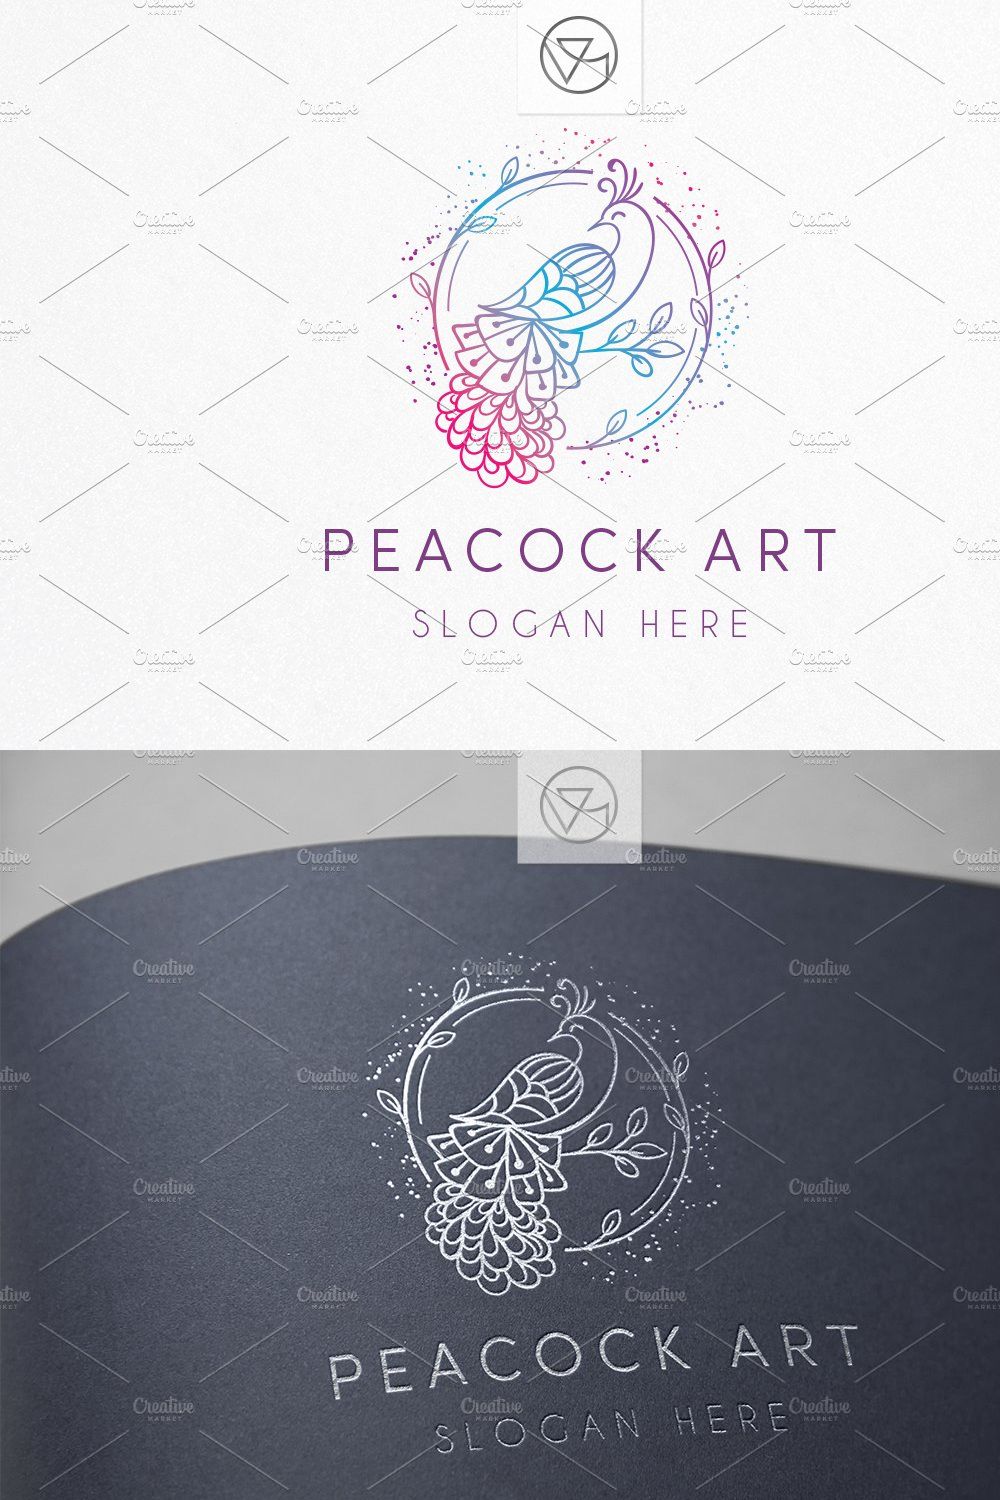 Peacock Art pinterest preview image.